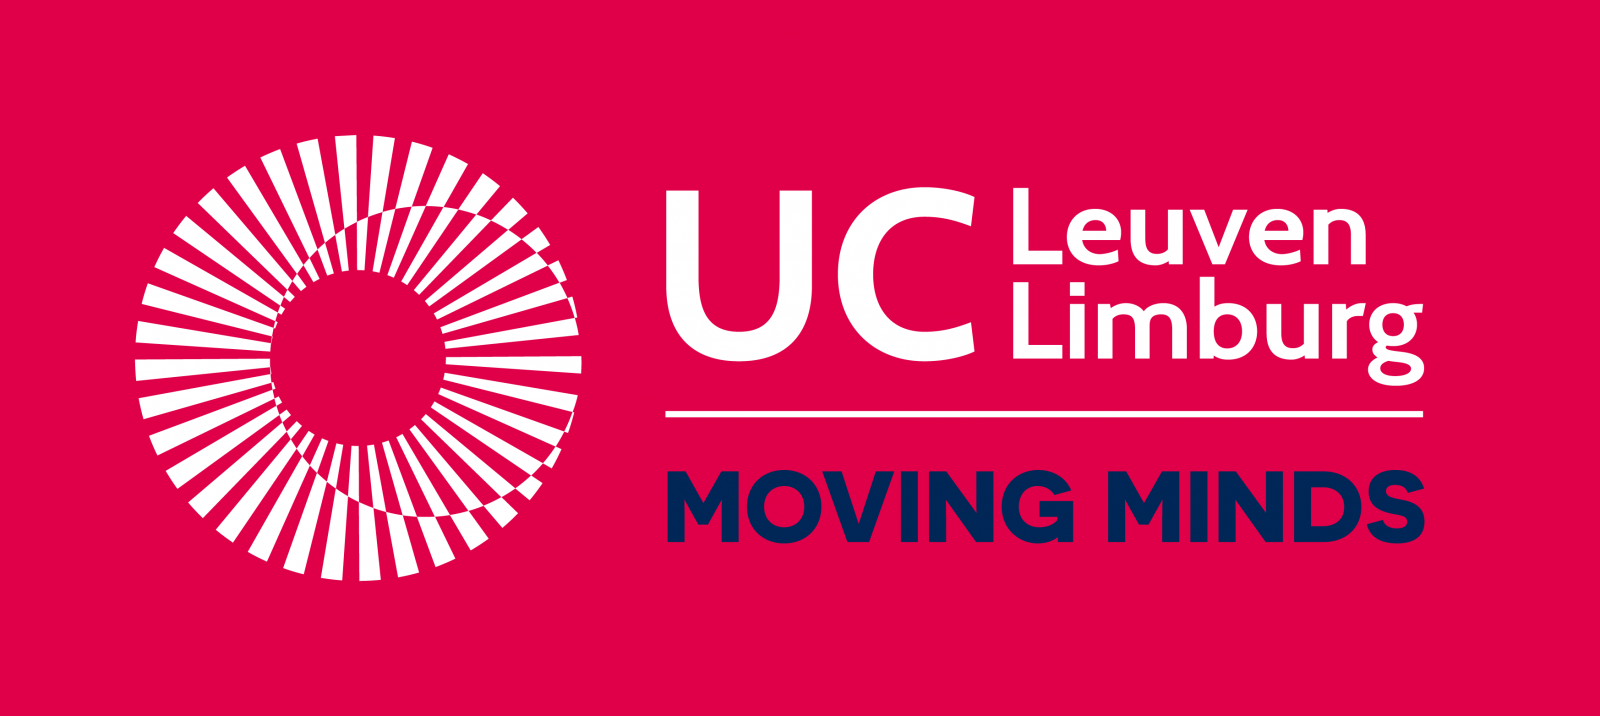 UC Leuven - Limburg